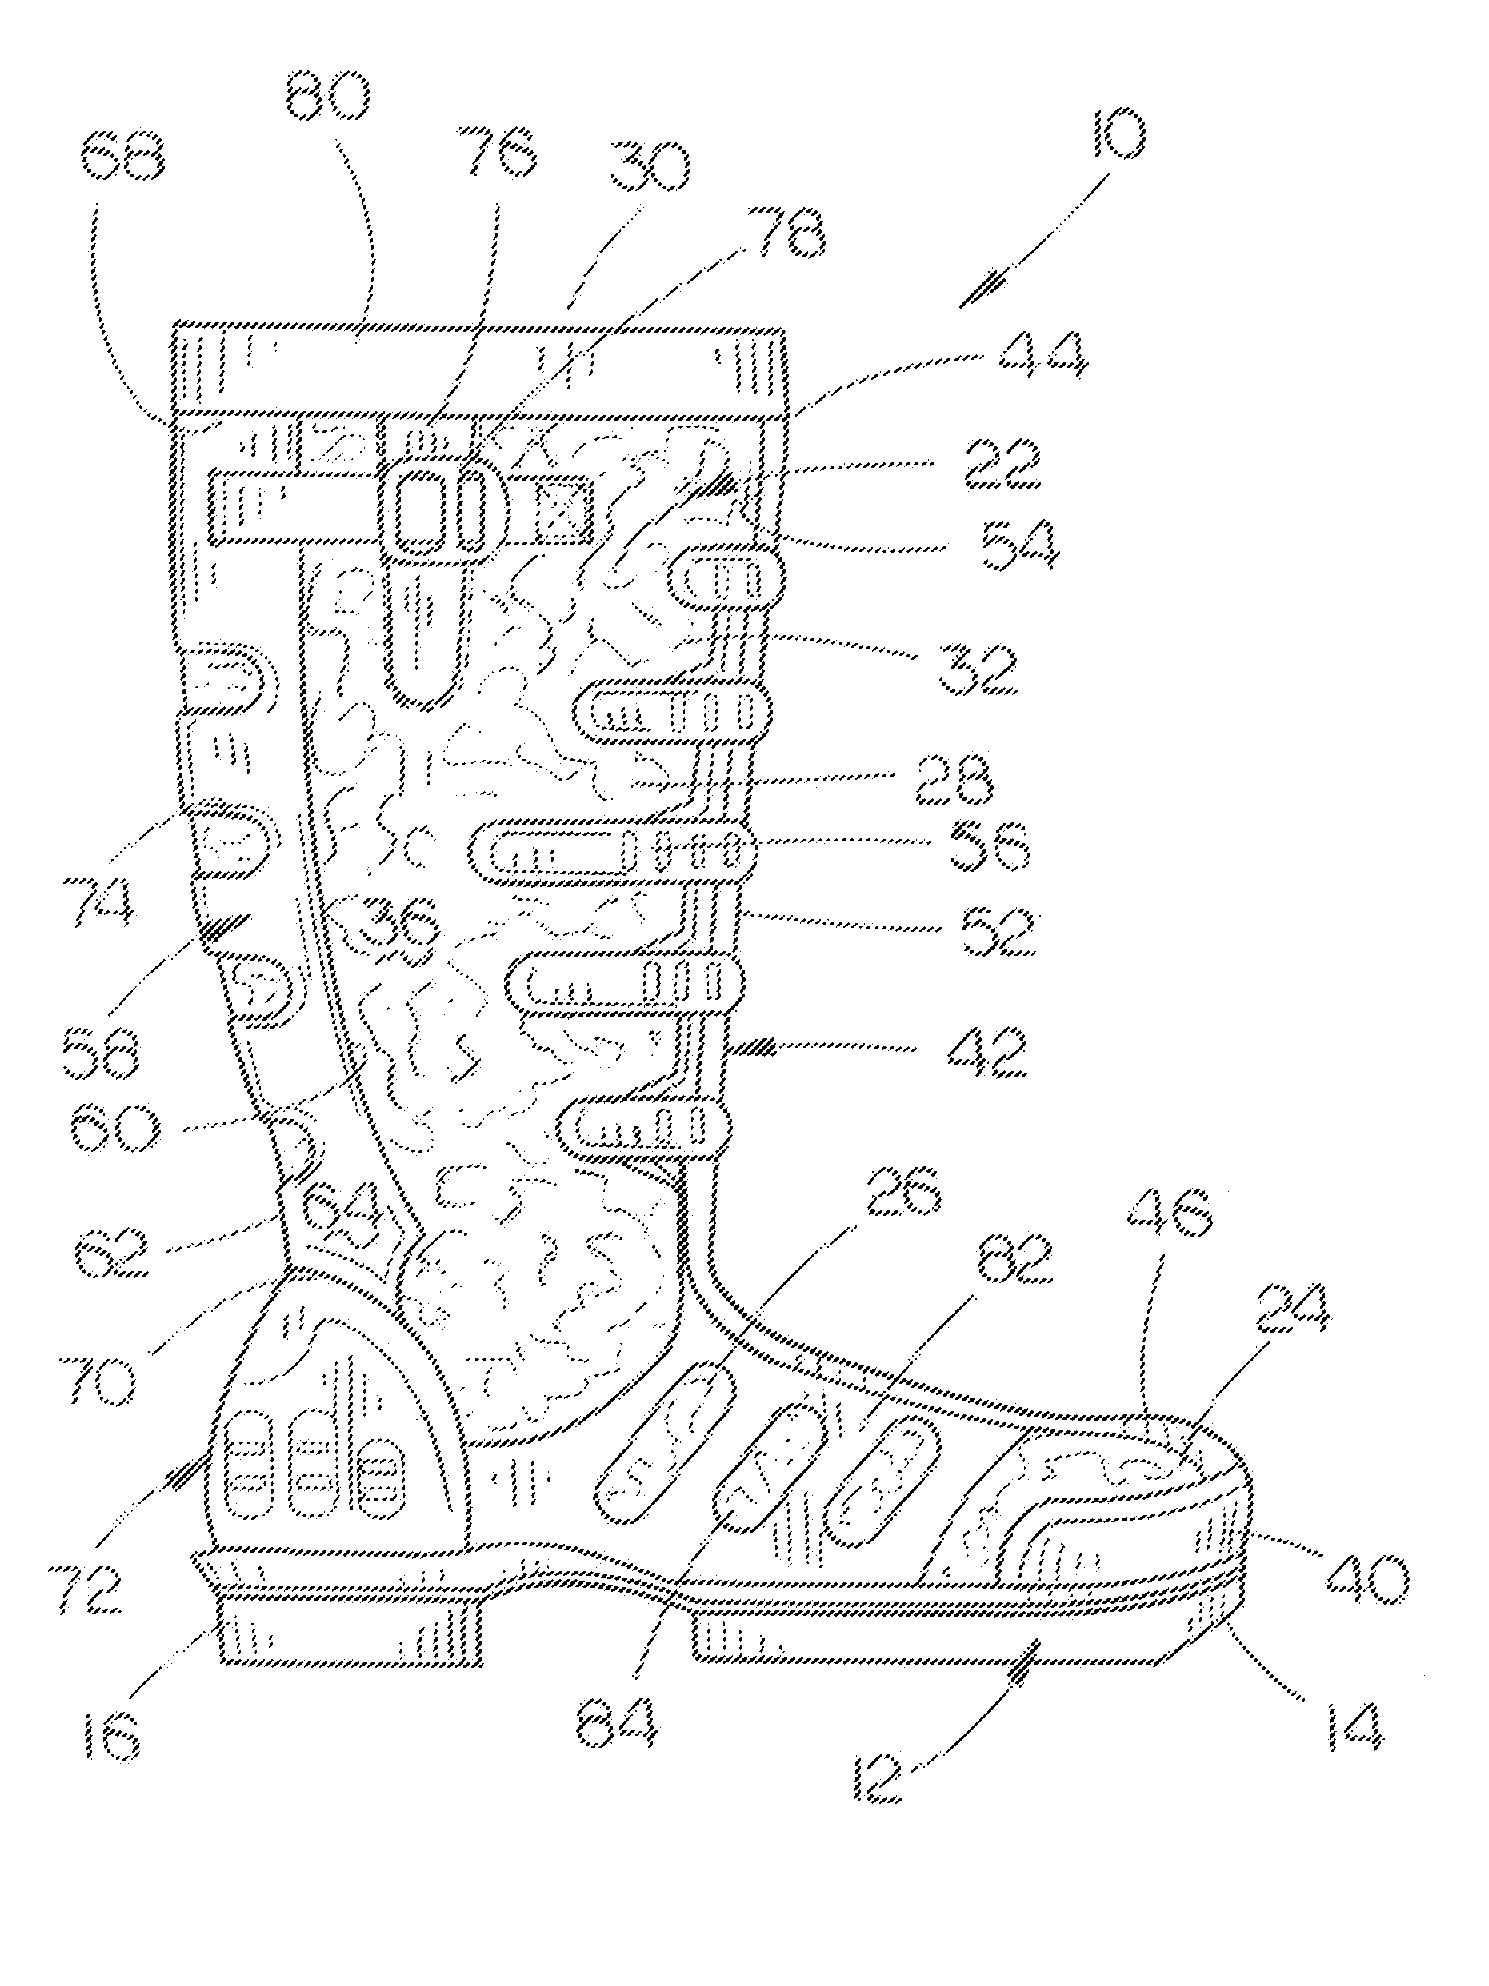 Waterproof breathable boot